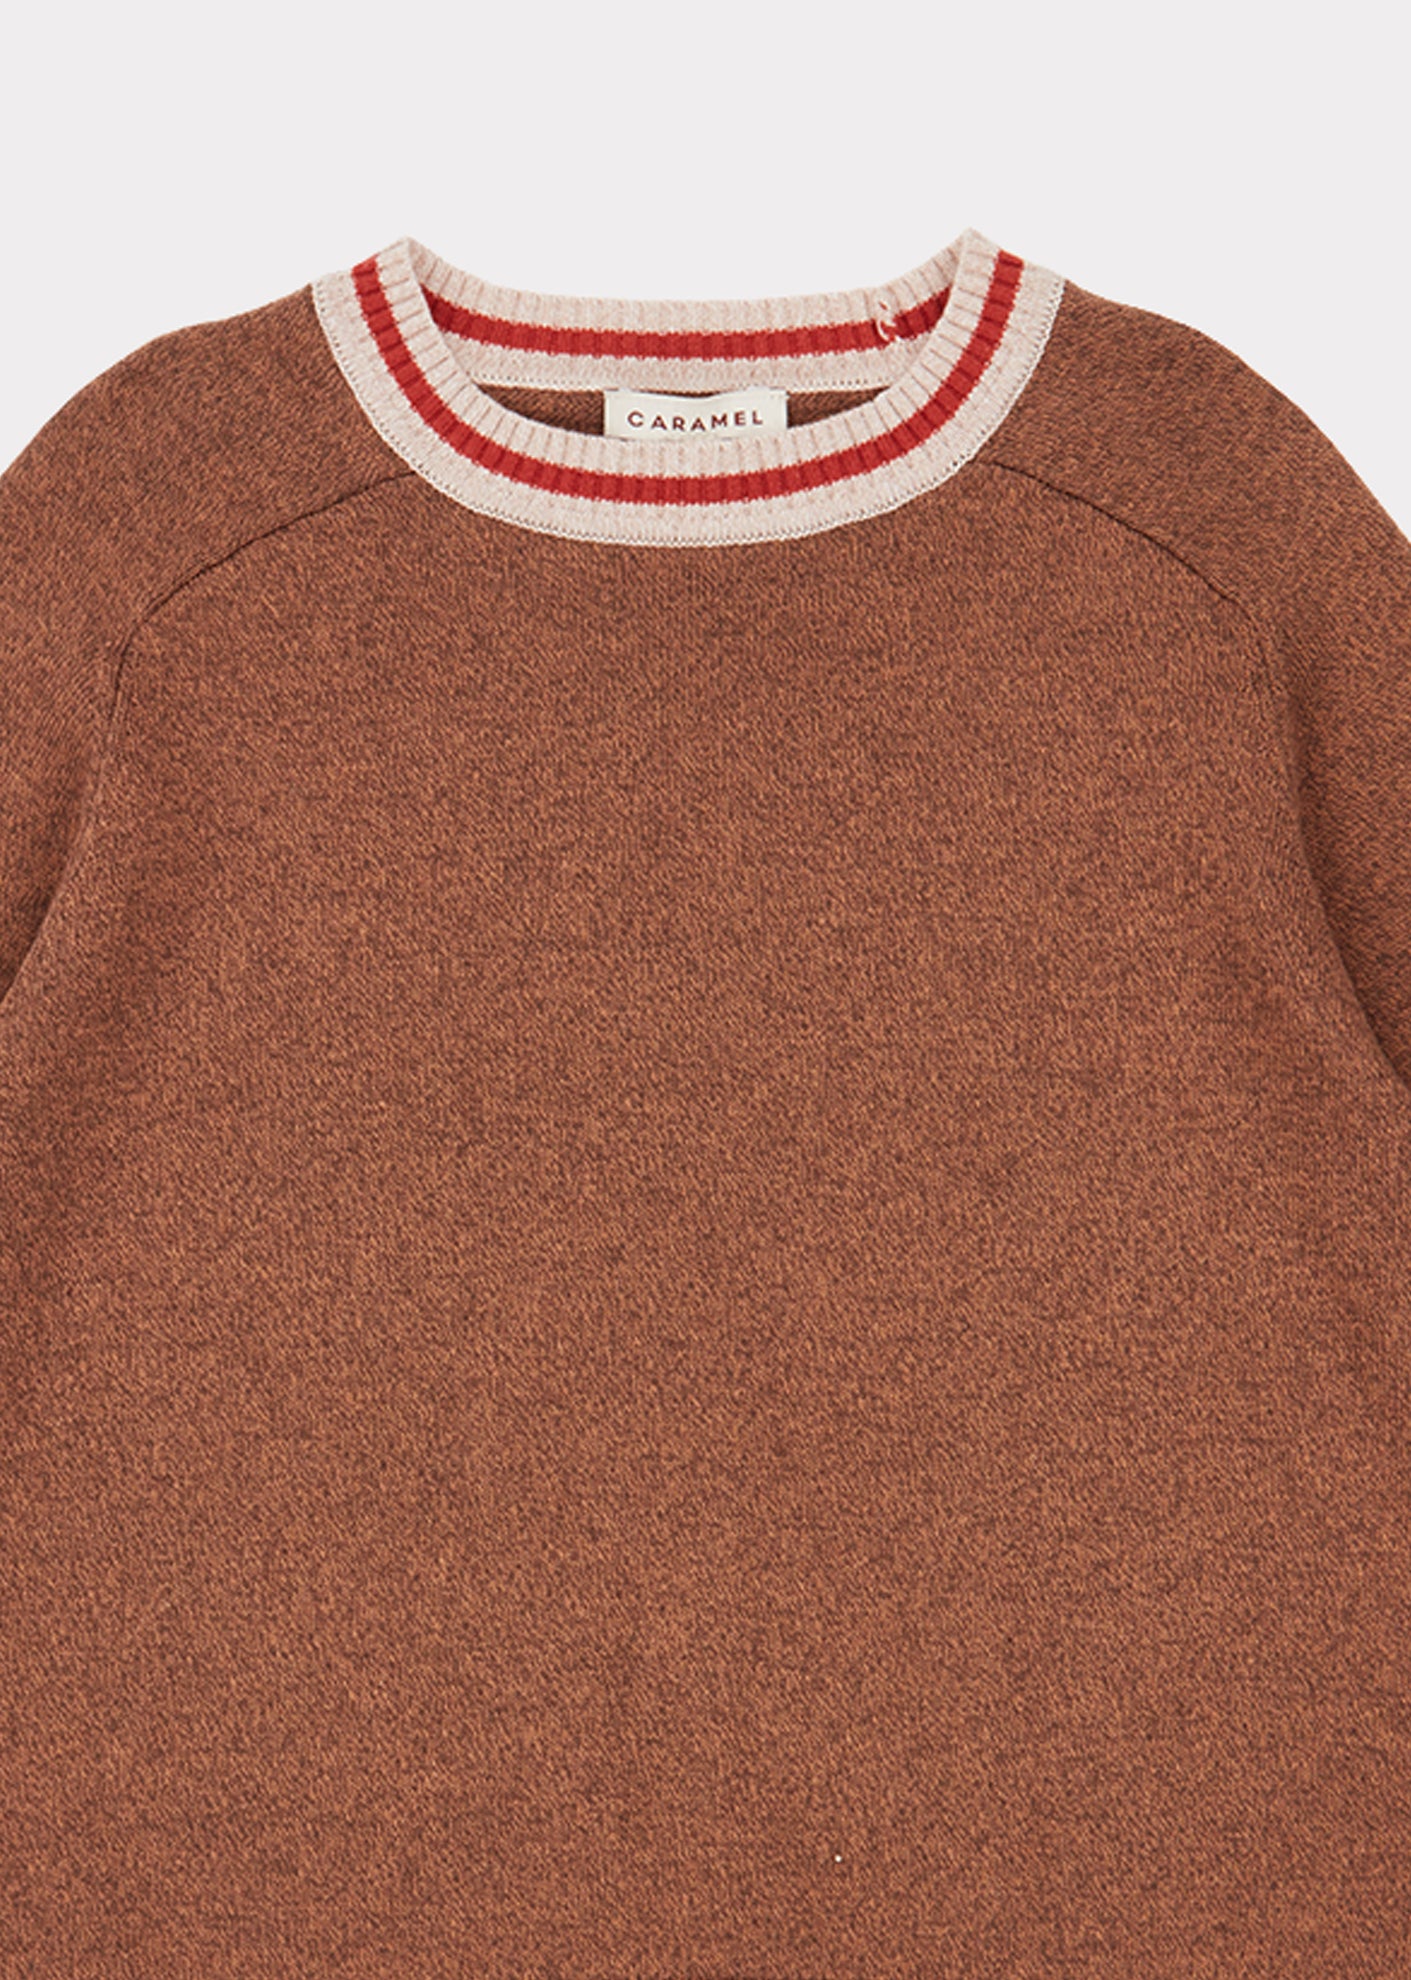 Girls Brown Cotton Sweater